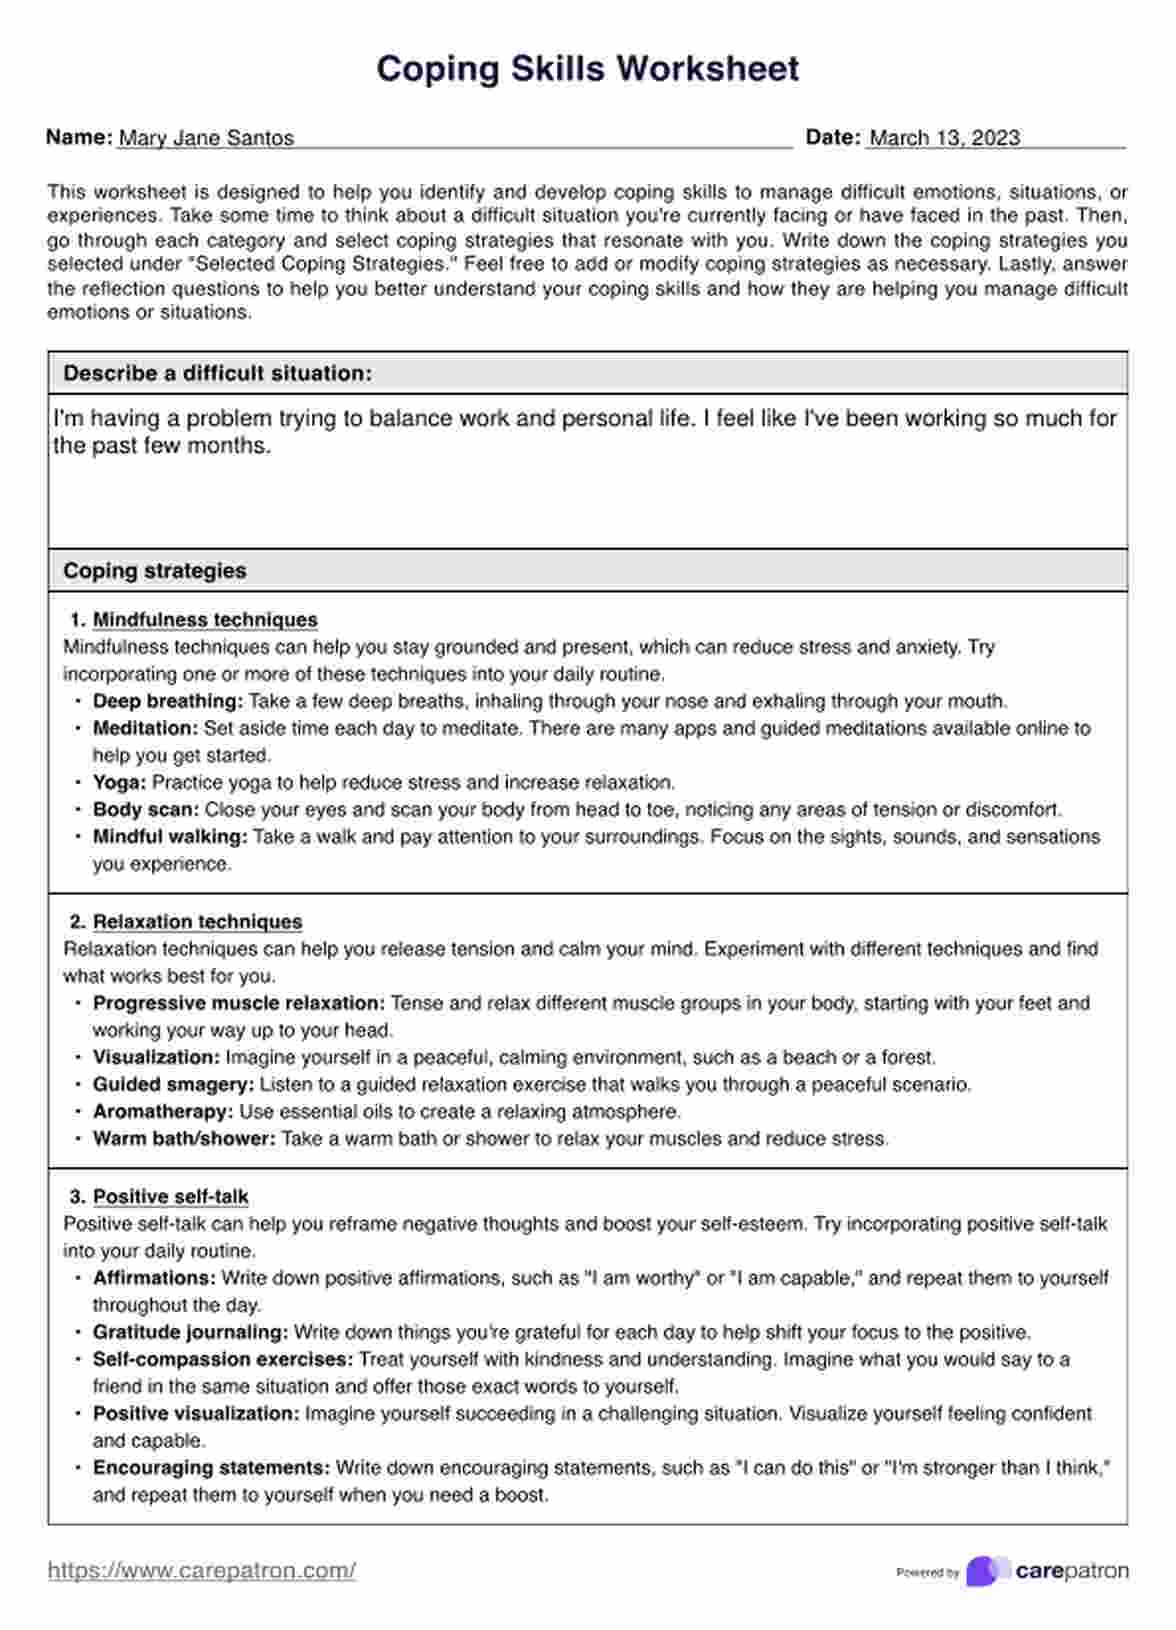 Coping Skills Worksheets PDF Example